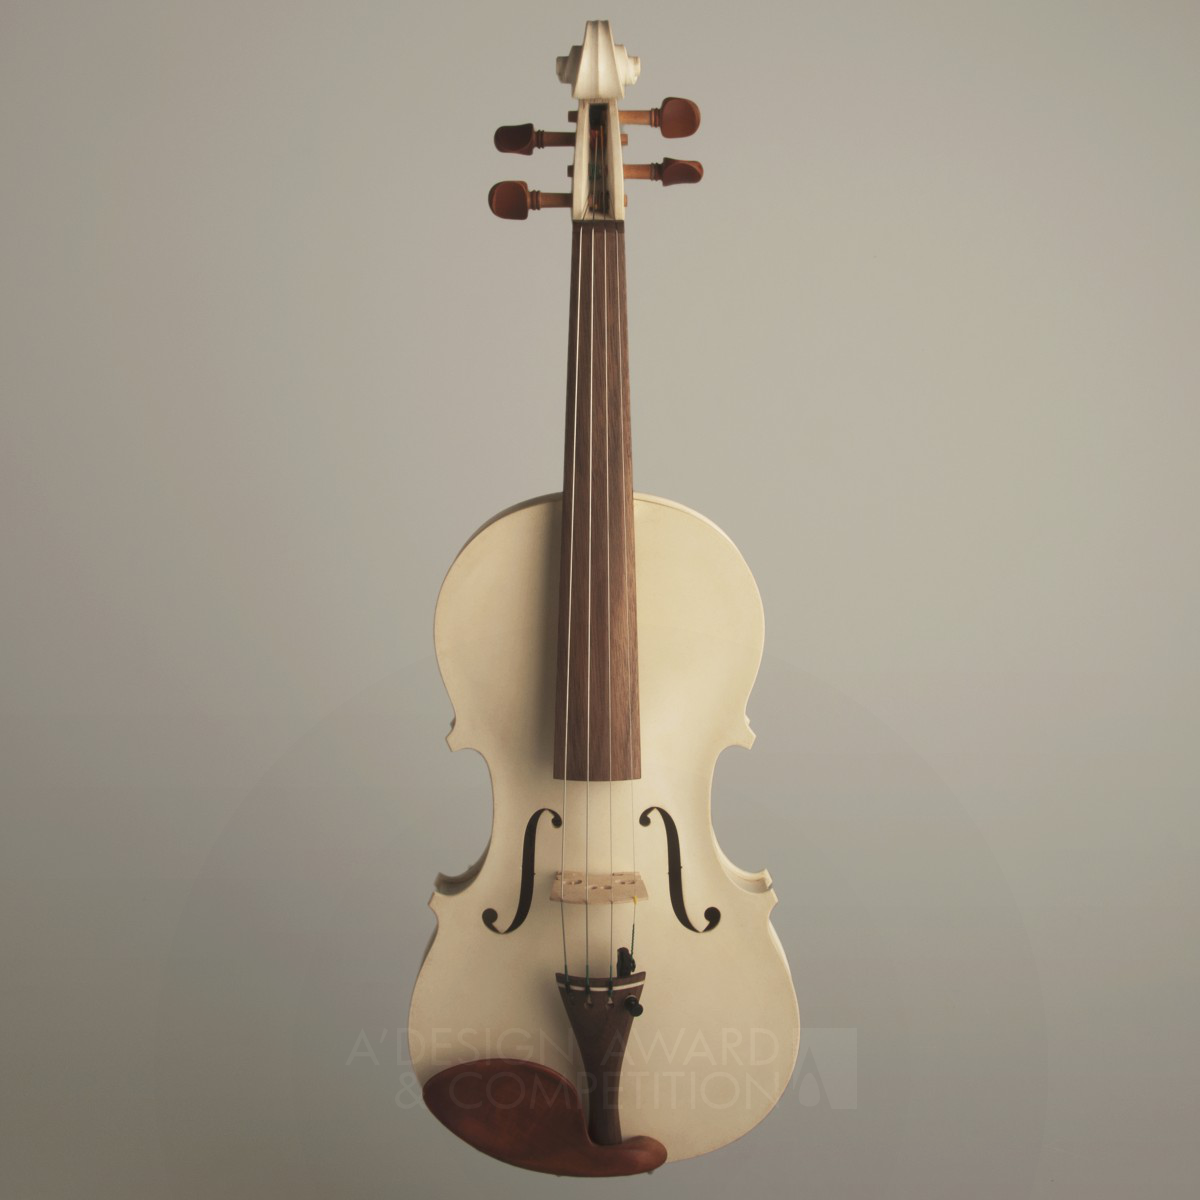 P&#039;iolin <b>Musical Instrument, Paper Craftwork